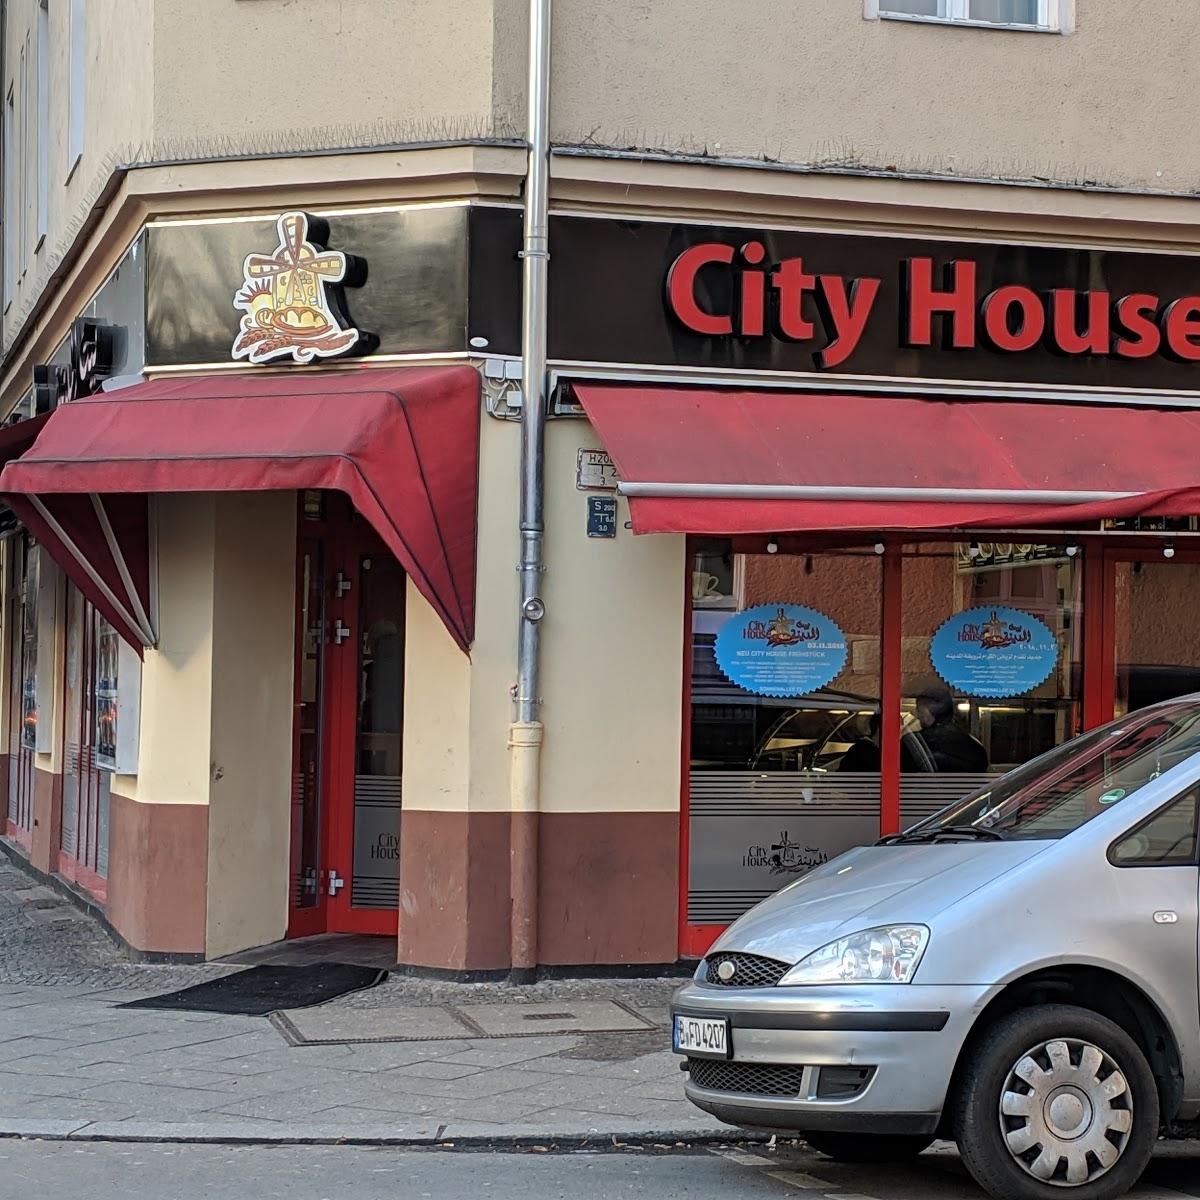 Restaurant "City House" in Berlin